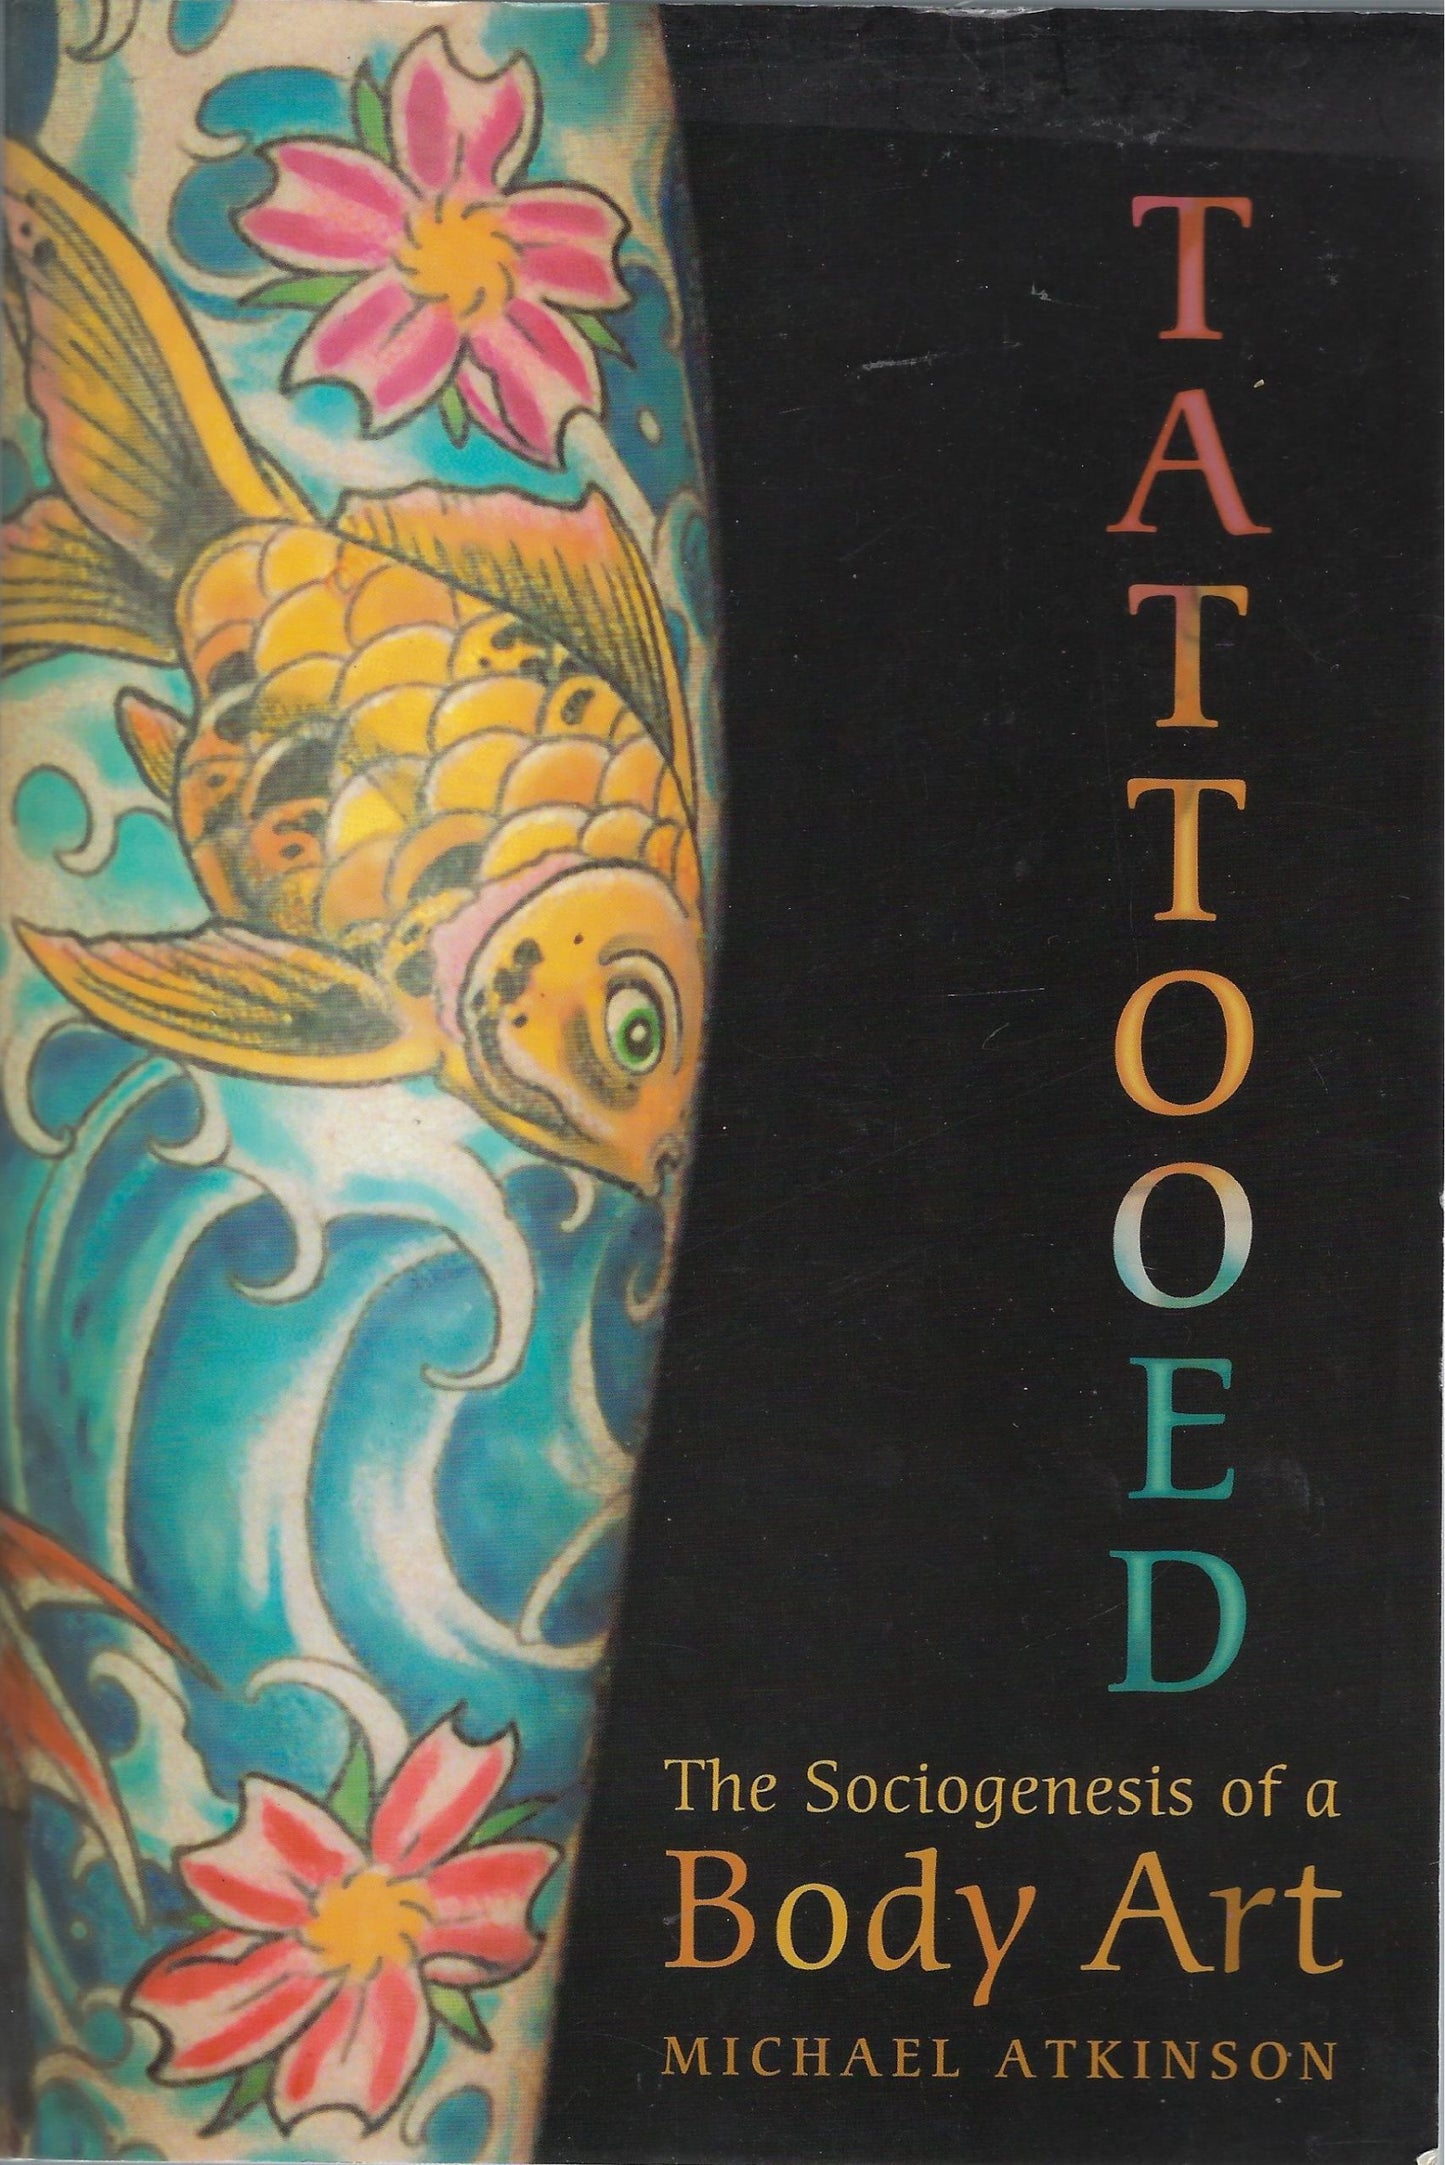 Tattooed / The Sociogenesis of a Body Art